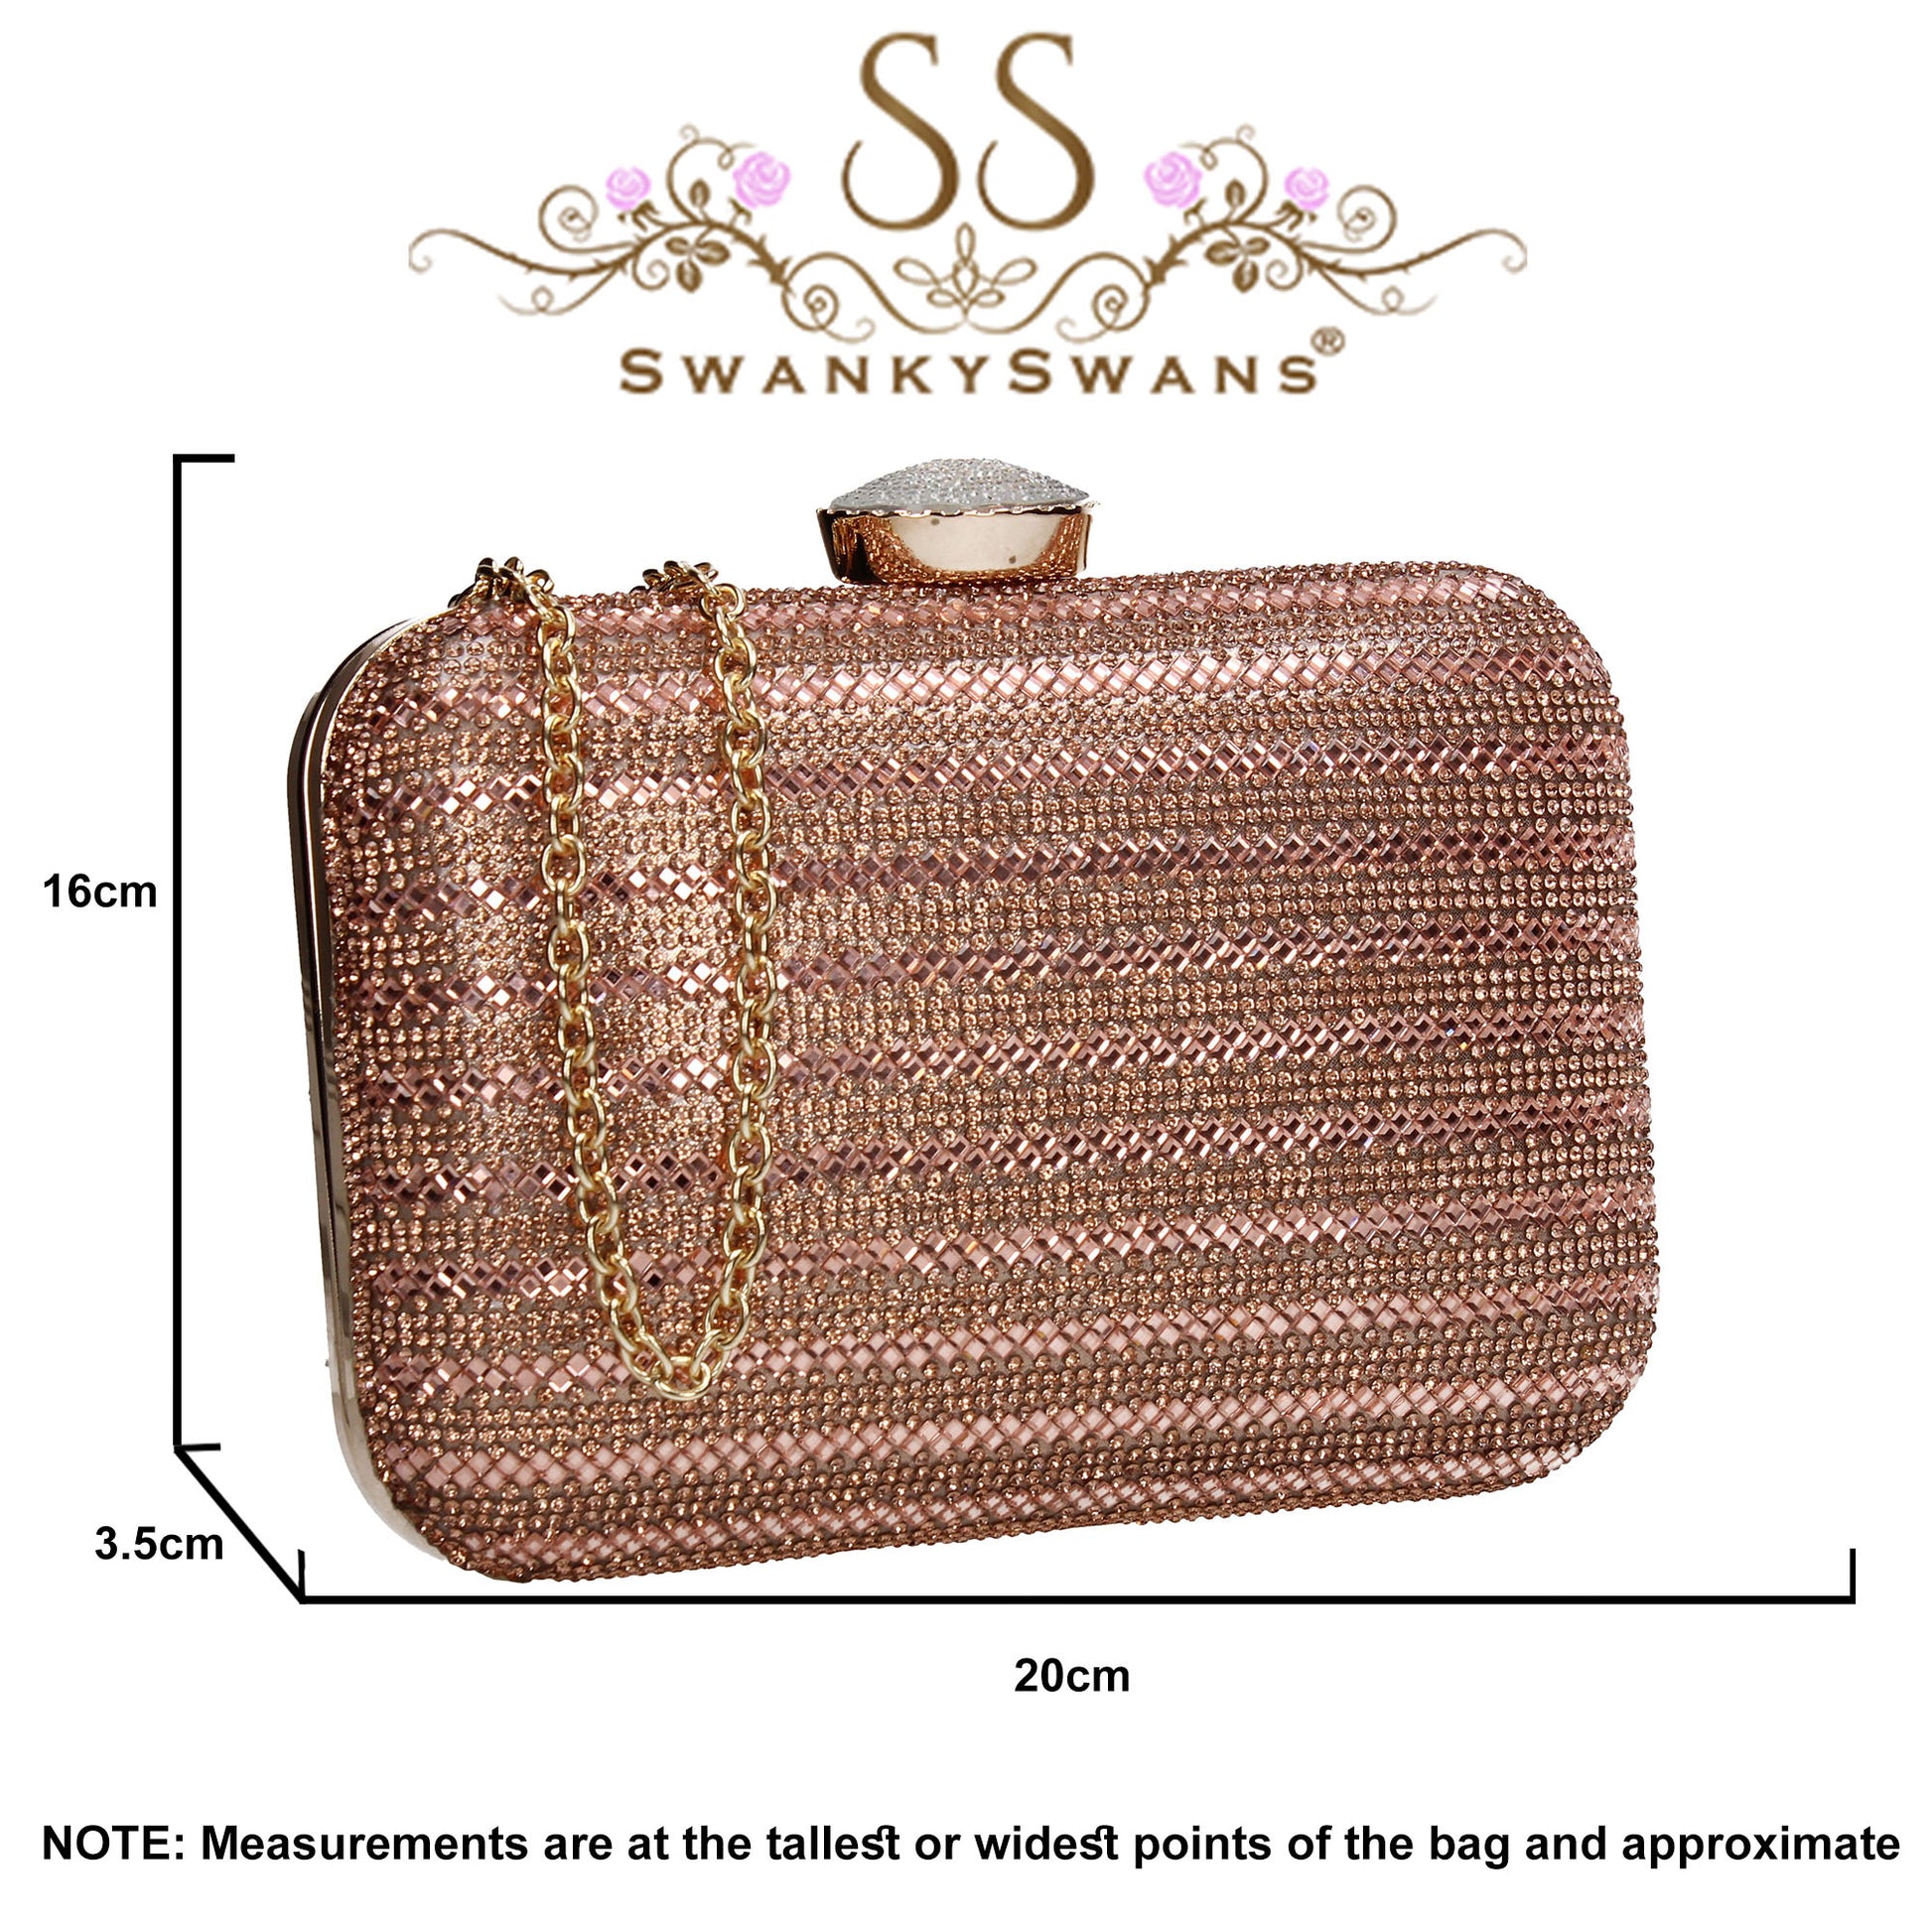 SWANKYSWANS Jane Clutch Bag Champagne Cute Cheap Clutch Bag For Weddings School and Work